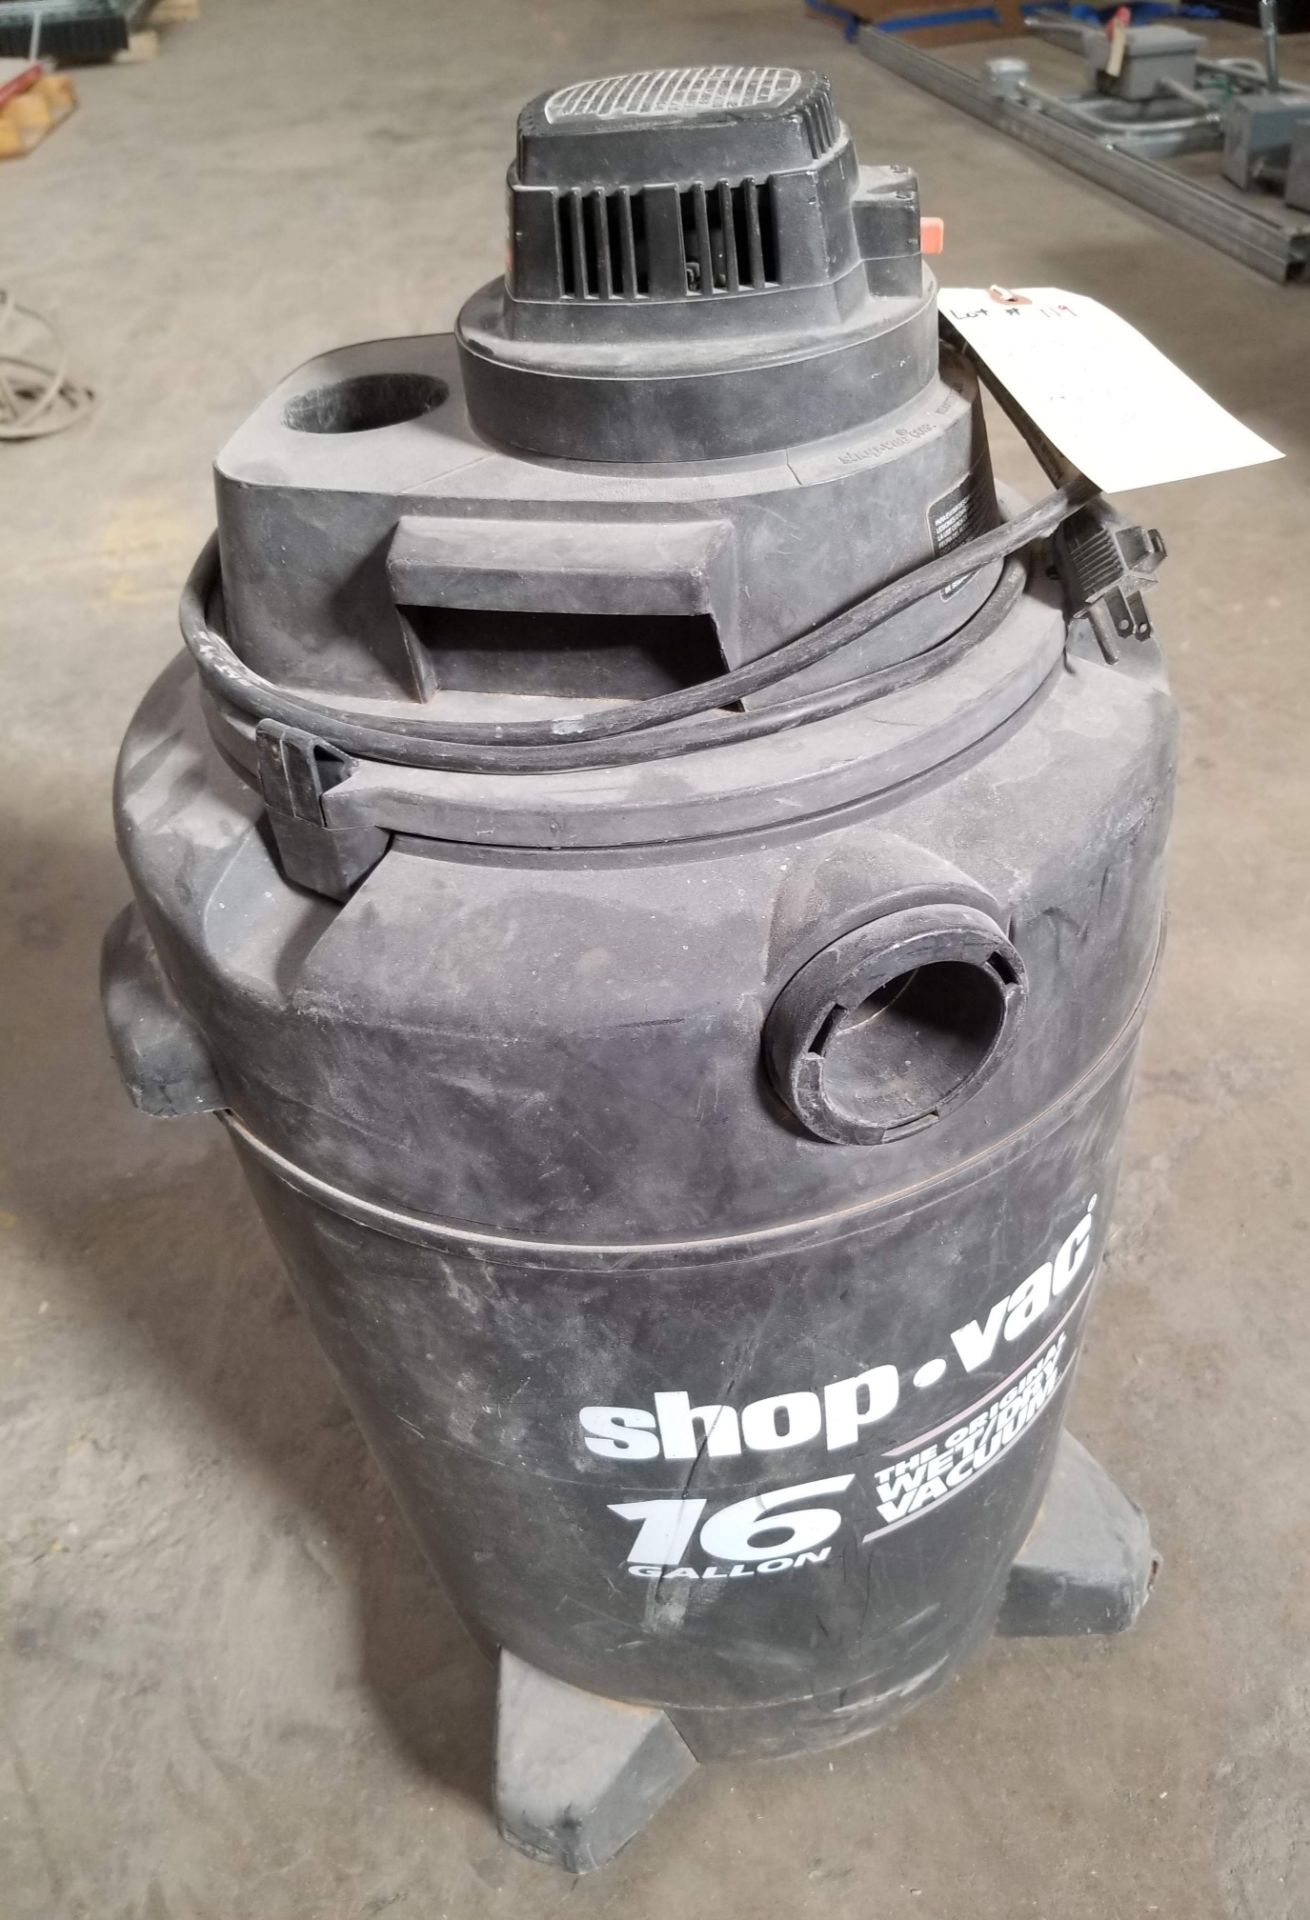 Shop Vac 16 Gallon Wet/Dry Vaccum 120V - Image 2 of 2